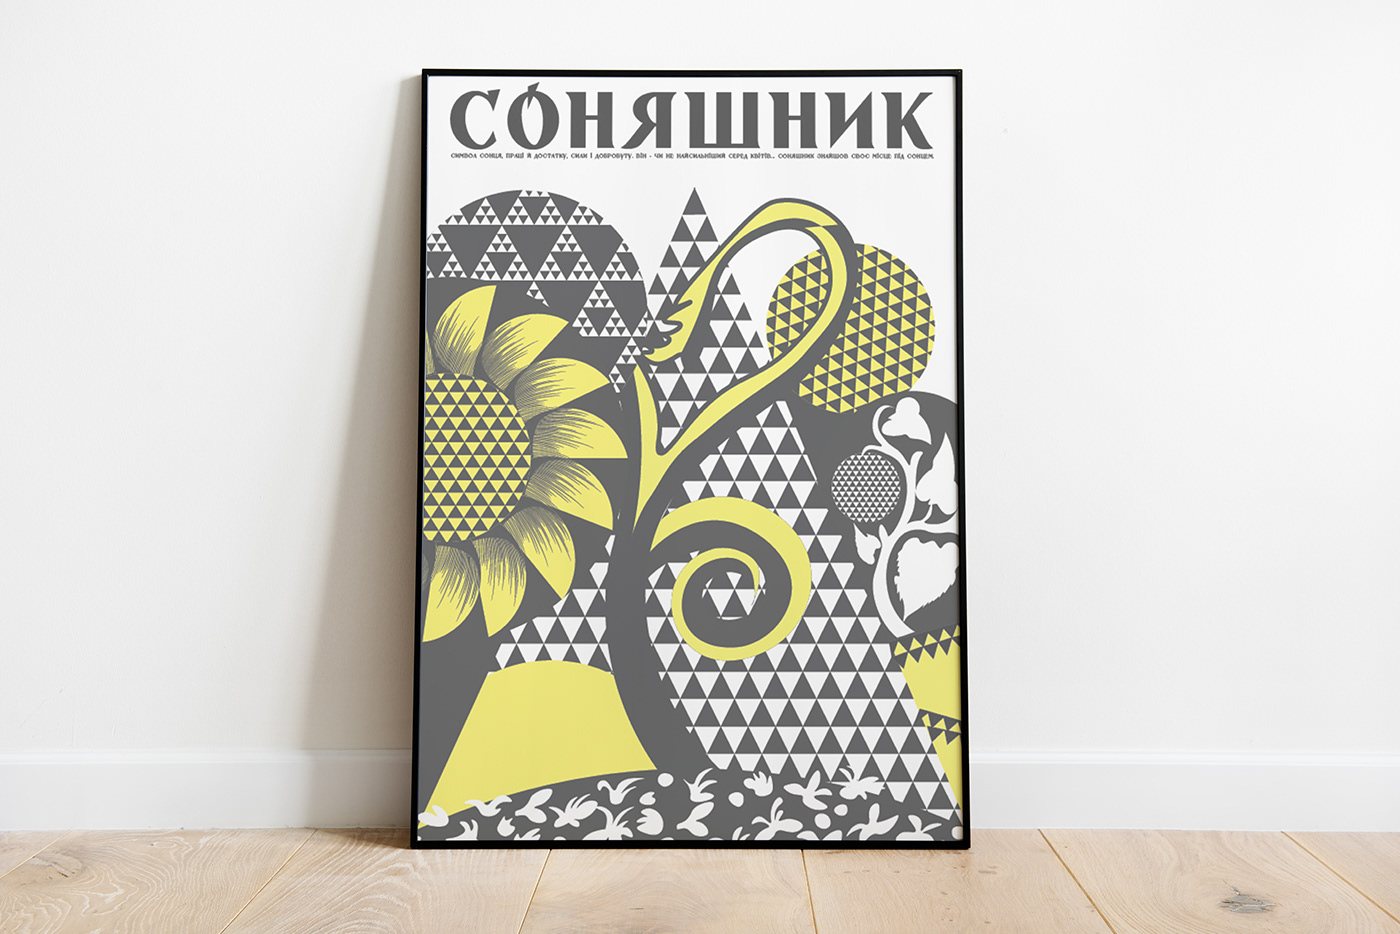 ukraine ukrainian design poster Narbut Mockup adobe illustrator sunflower Україна Narbut style Ukrainian Poster